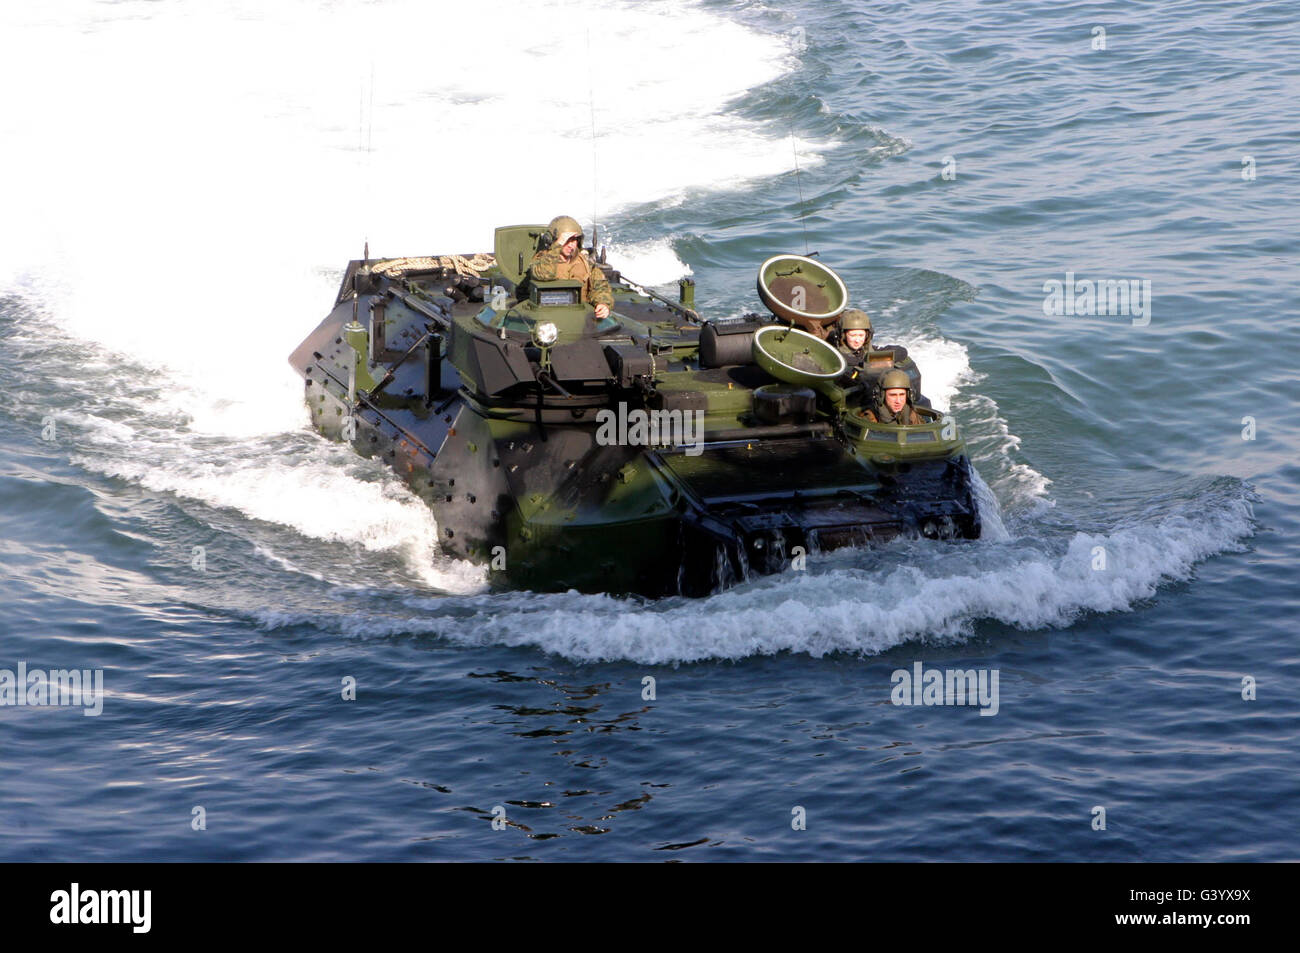 An amphibious assault vehicle. Stock Photo